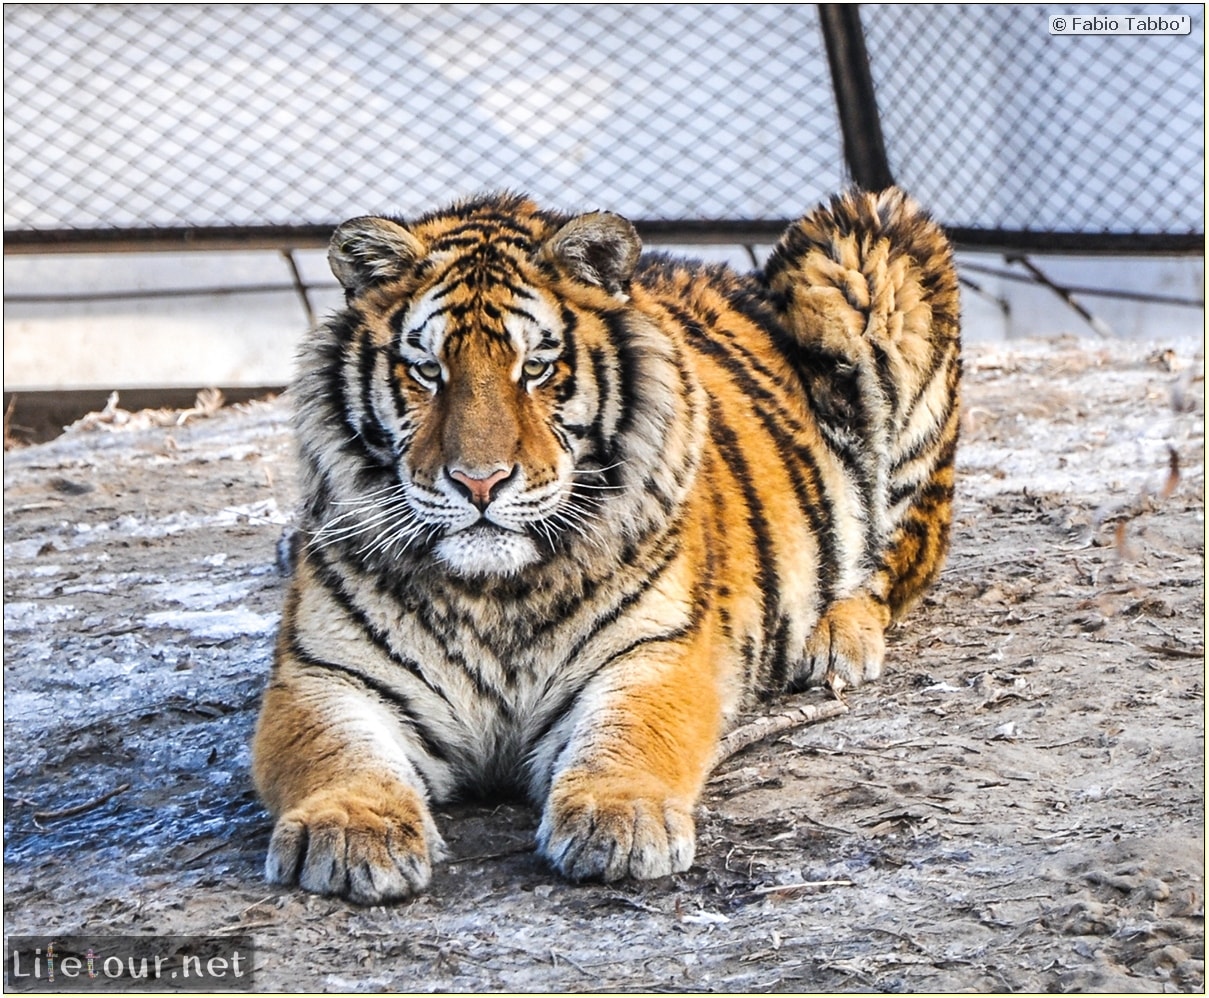 Fabio's LifeTour - China (1993-1997 and 2014) - Harbin (2014) - Siberian Tiger Park - 5652 COVER